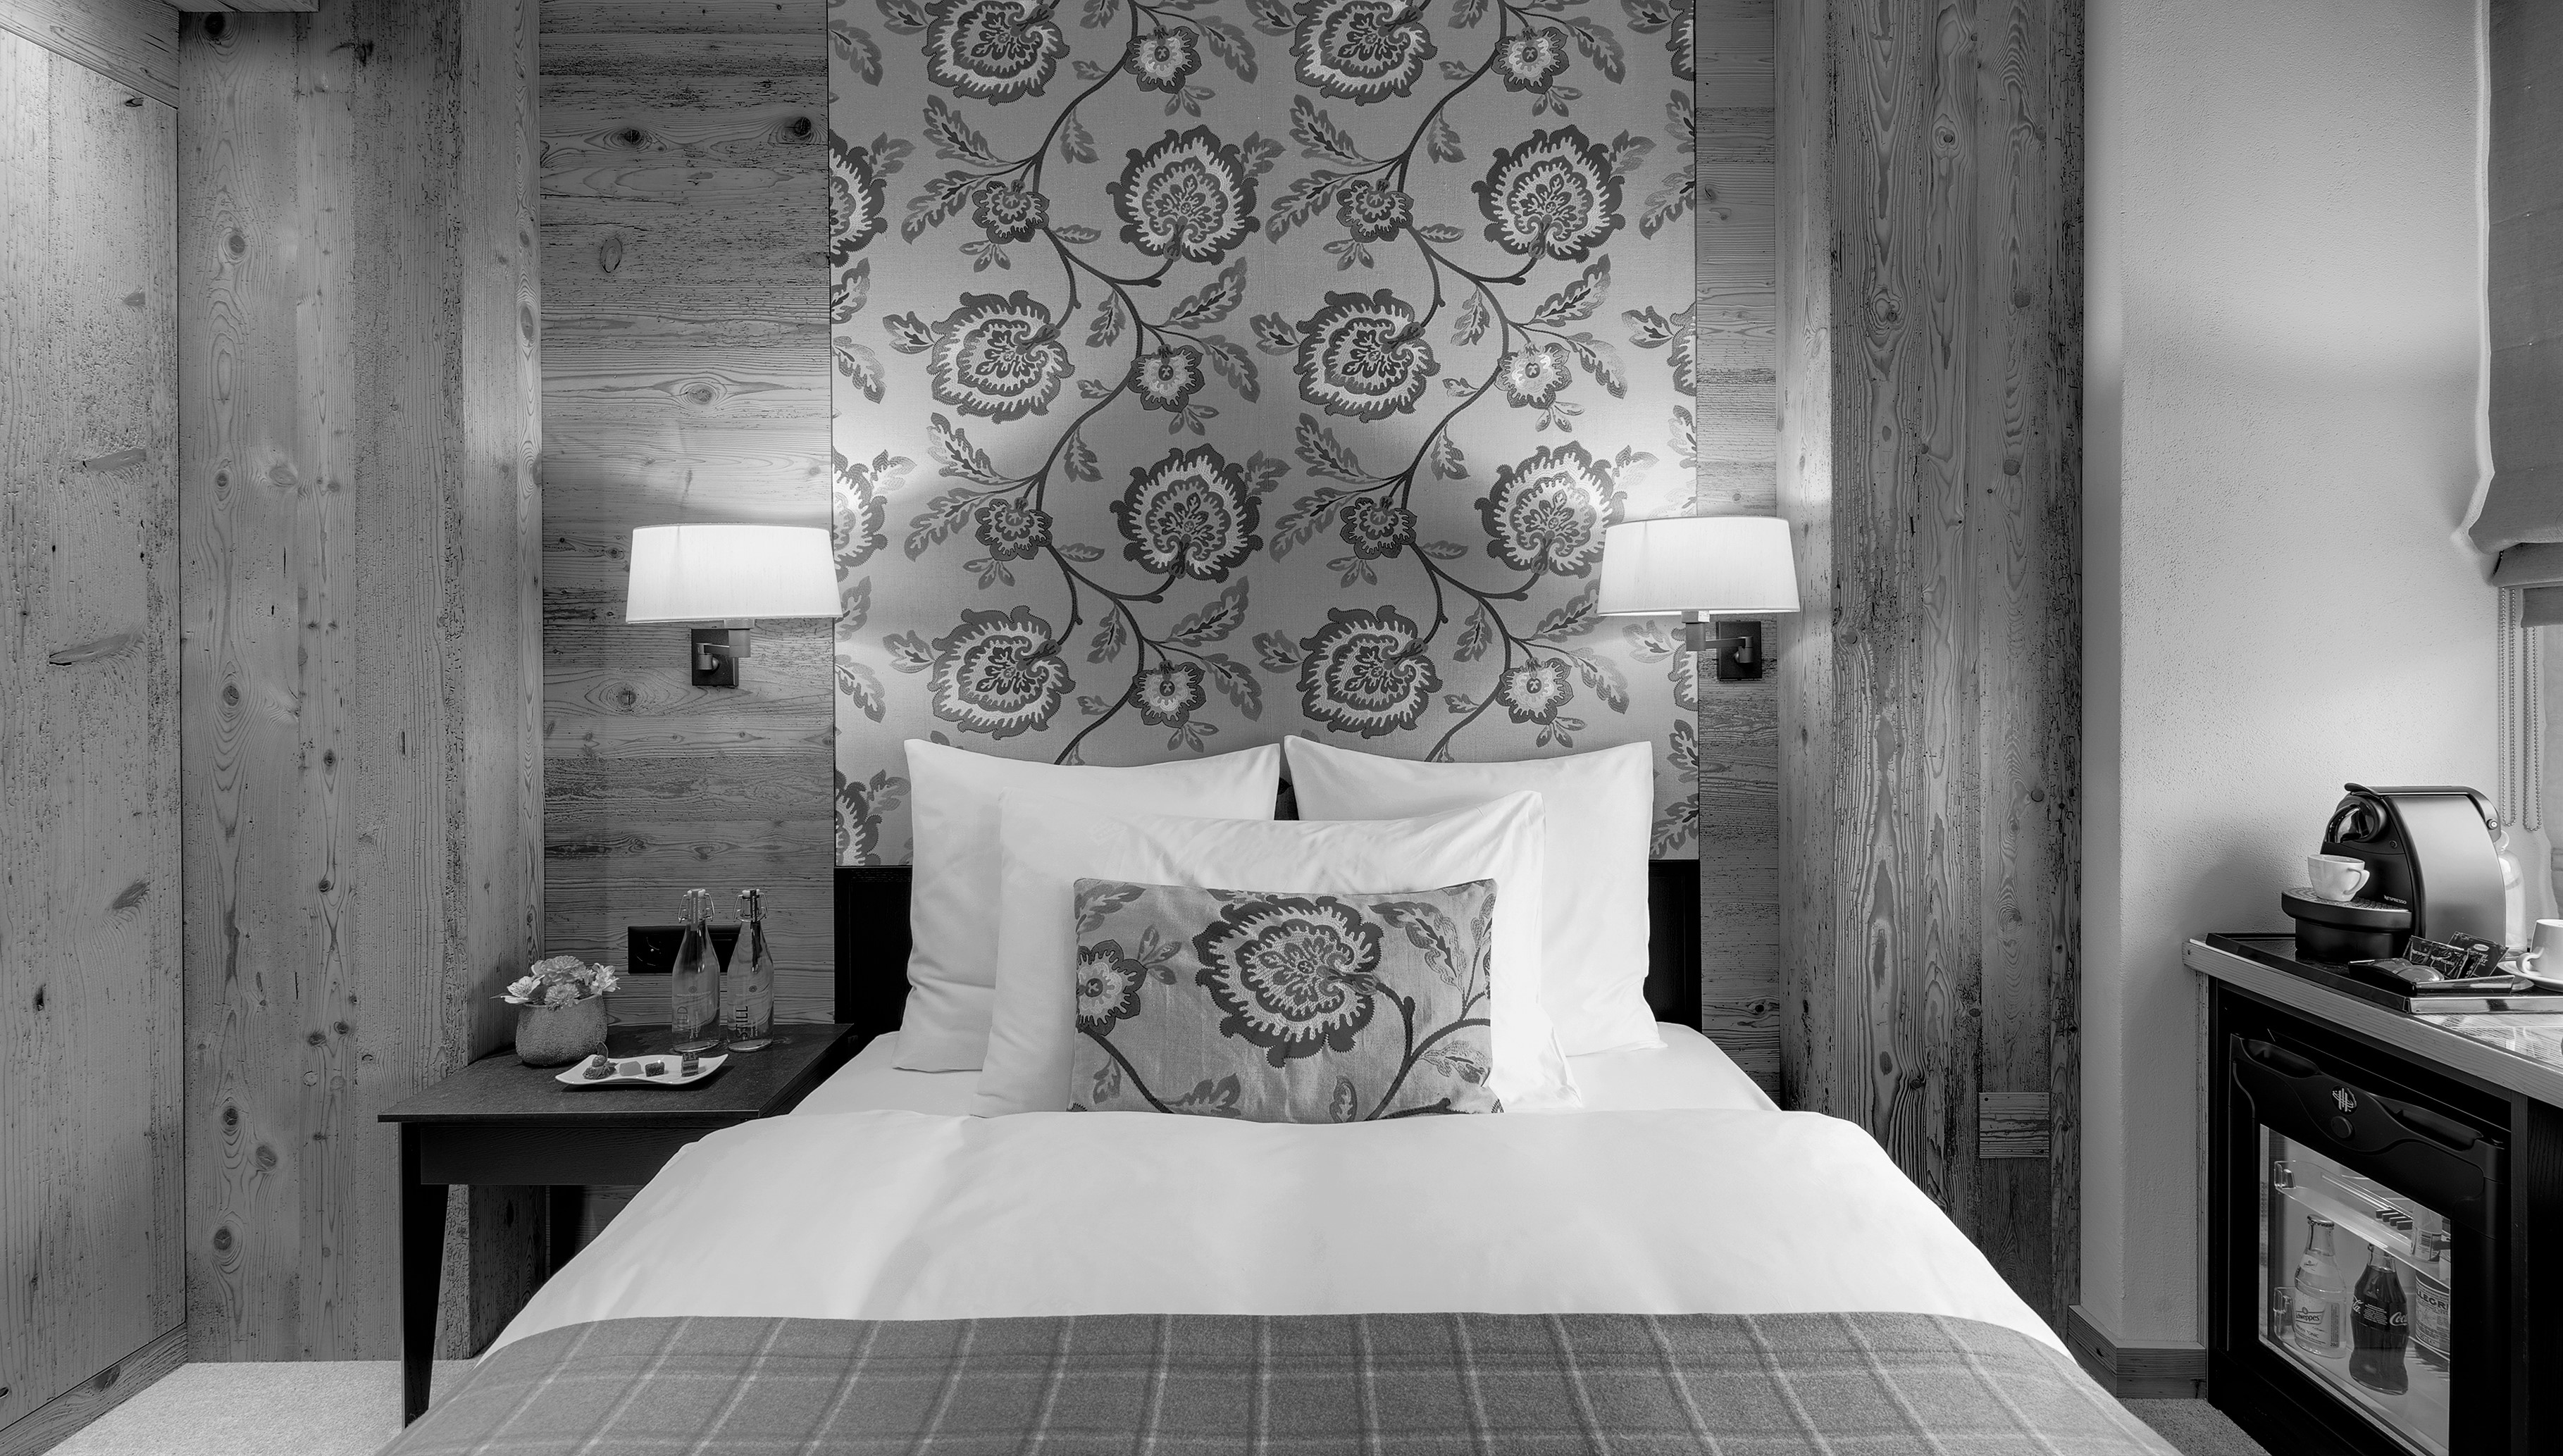 Overnight accommodation<br>
Morosani Schweizerhof<br>